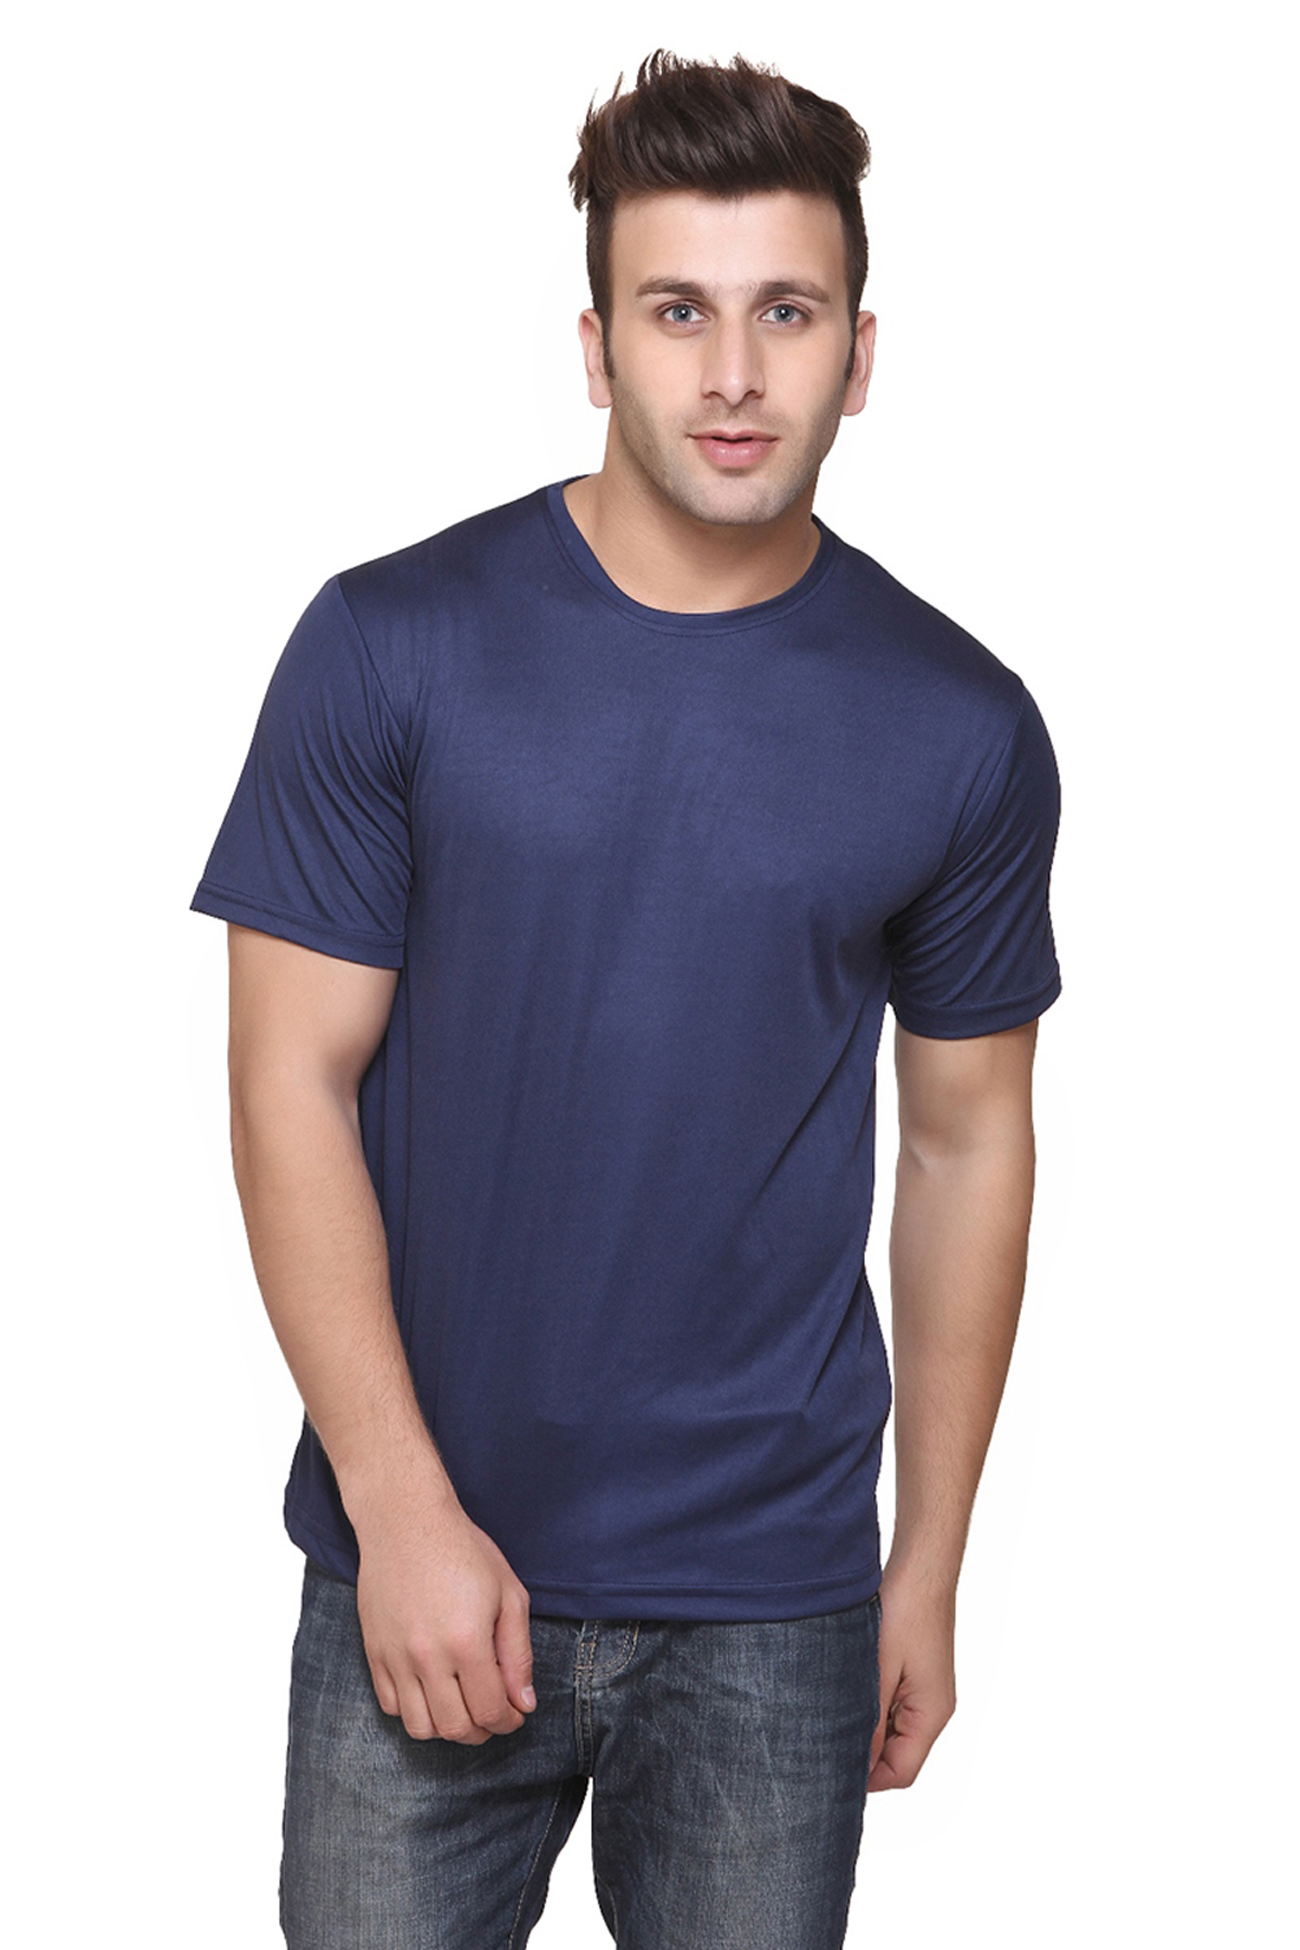 Buy Ketex Navyblue Round Neck Dri-Fit Tshirt Online - Get 70% Off